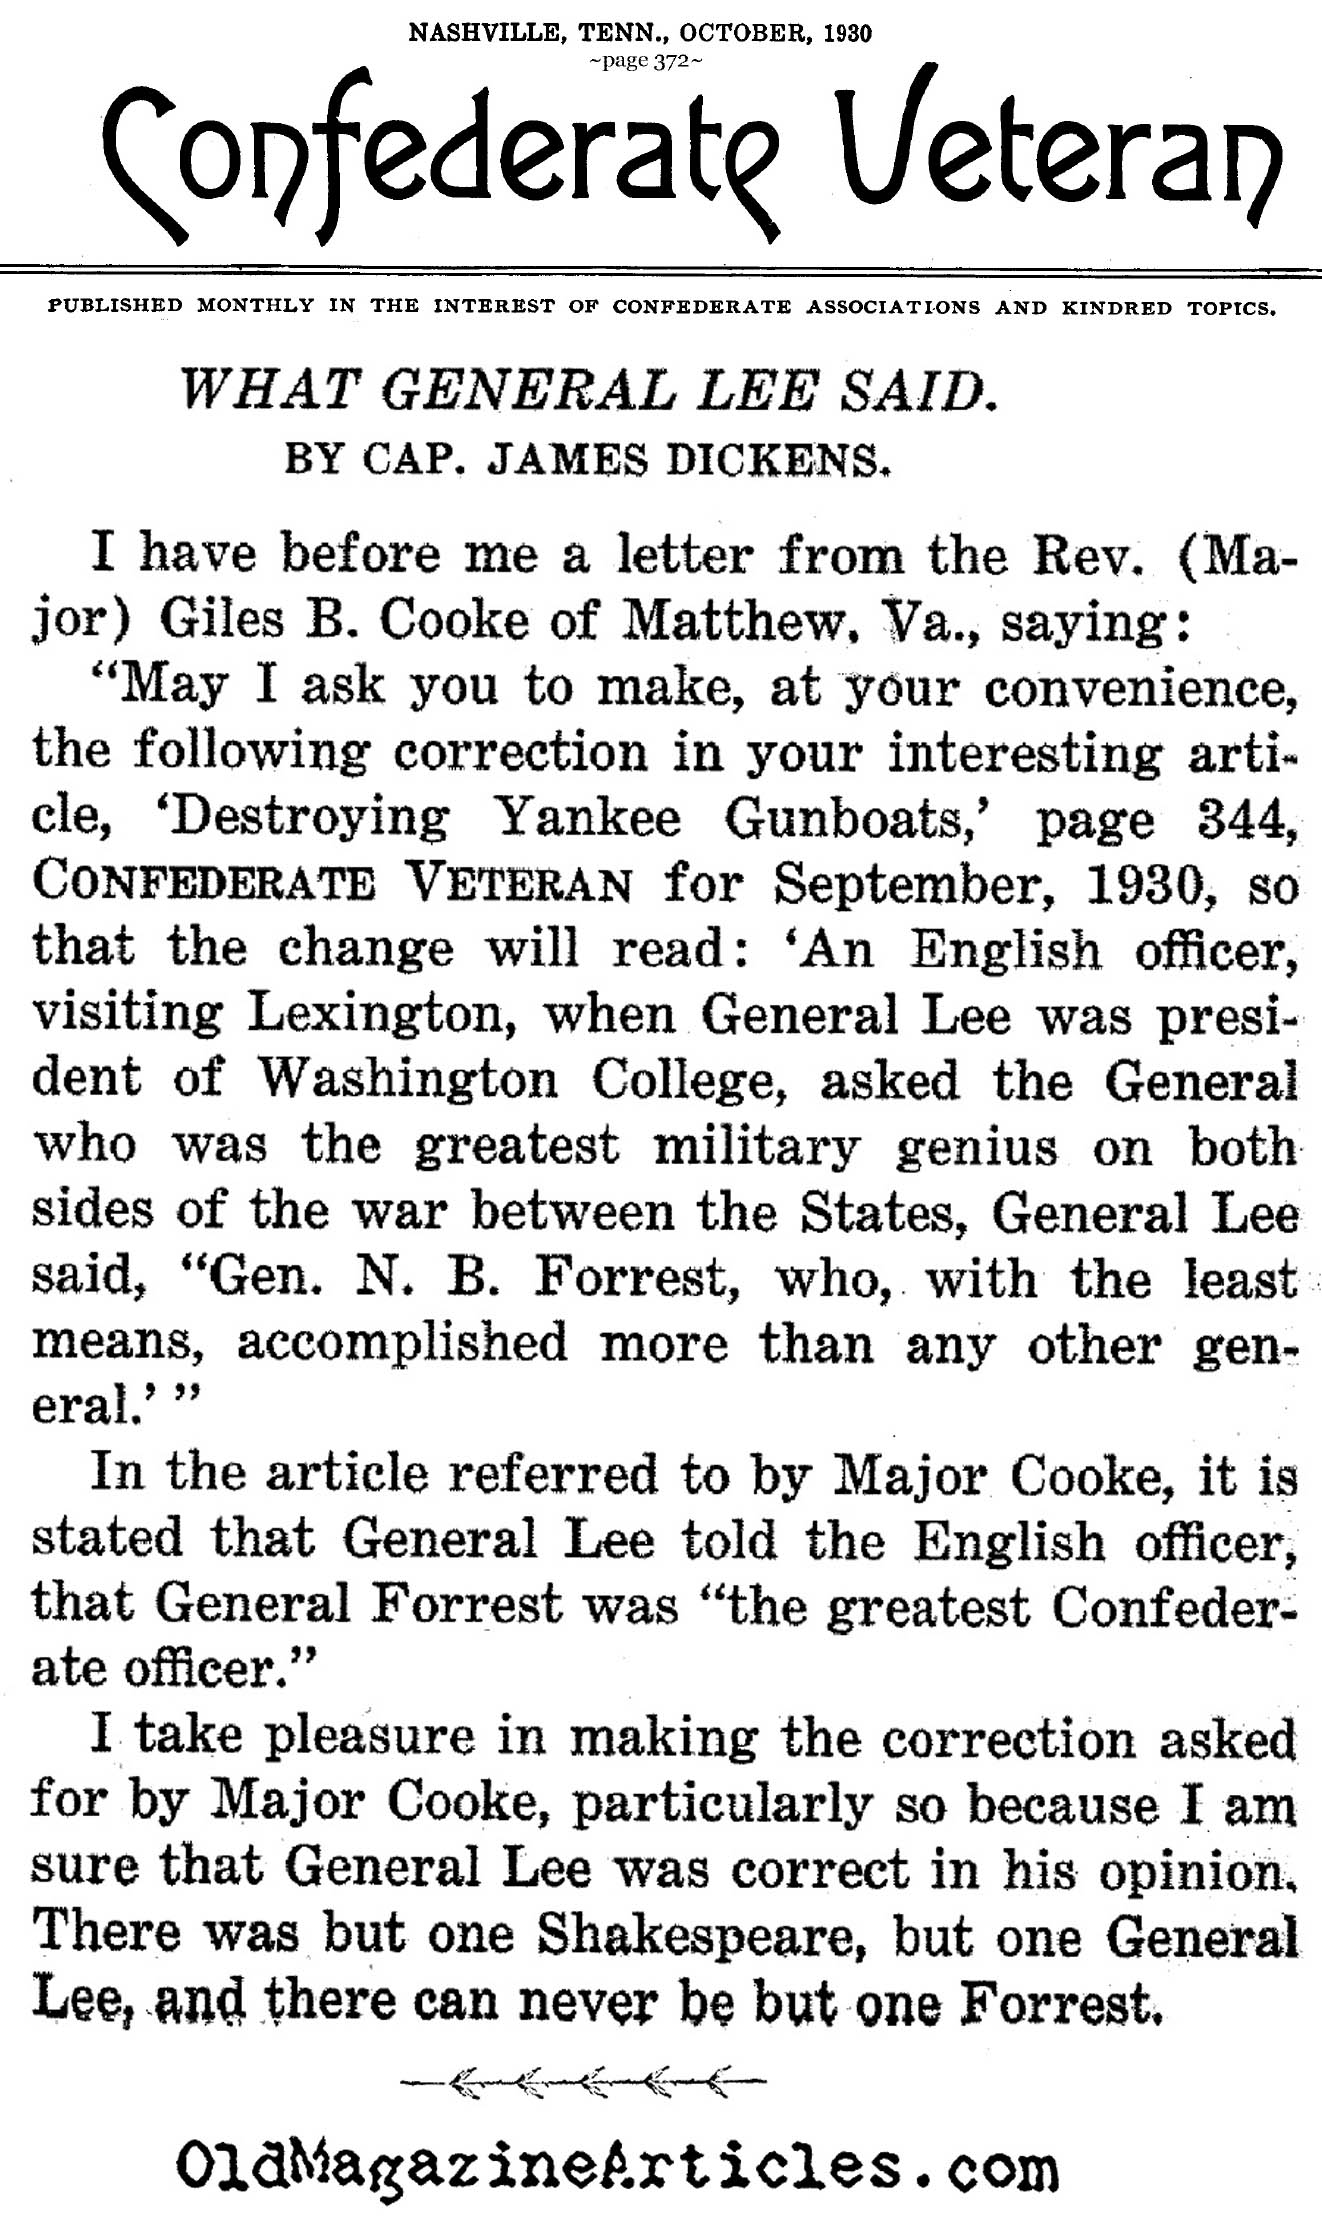 Robert E. Lee's Favorite General (Confederate Veteran Magazine, 1930)